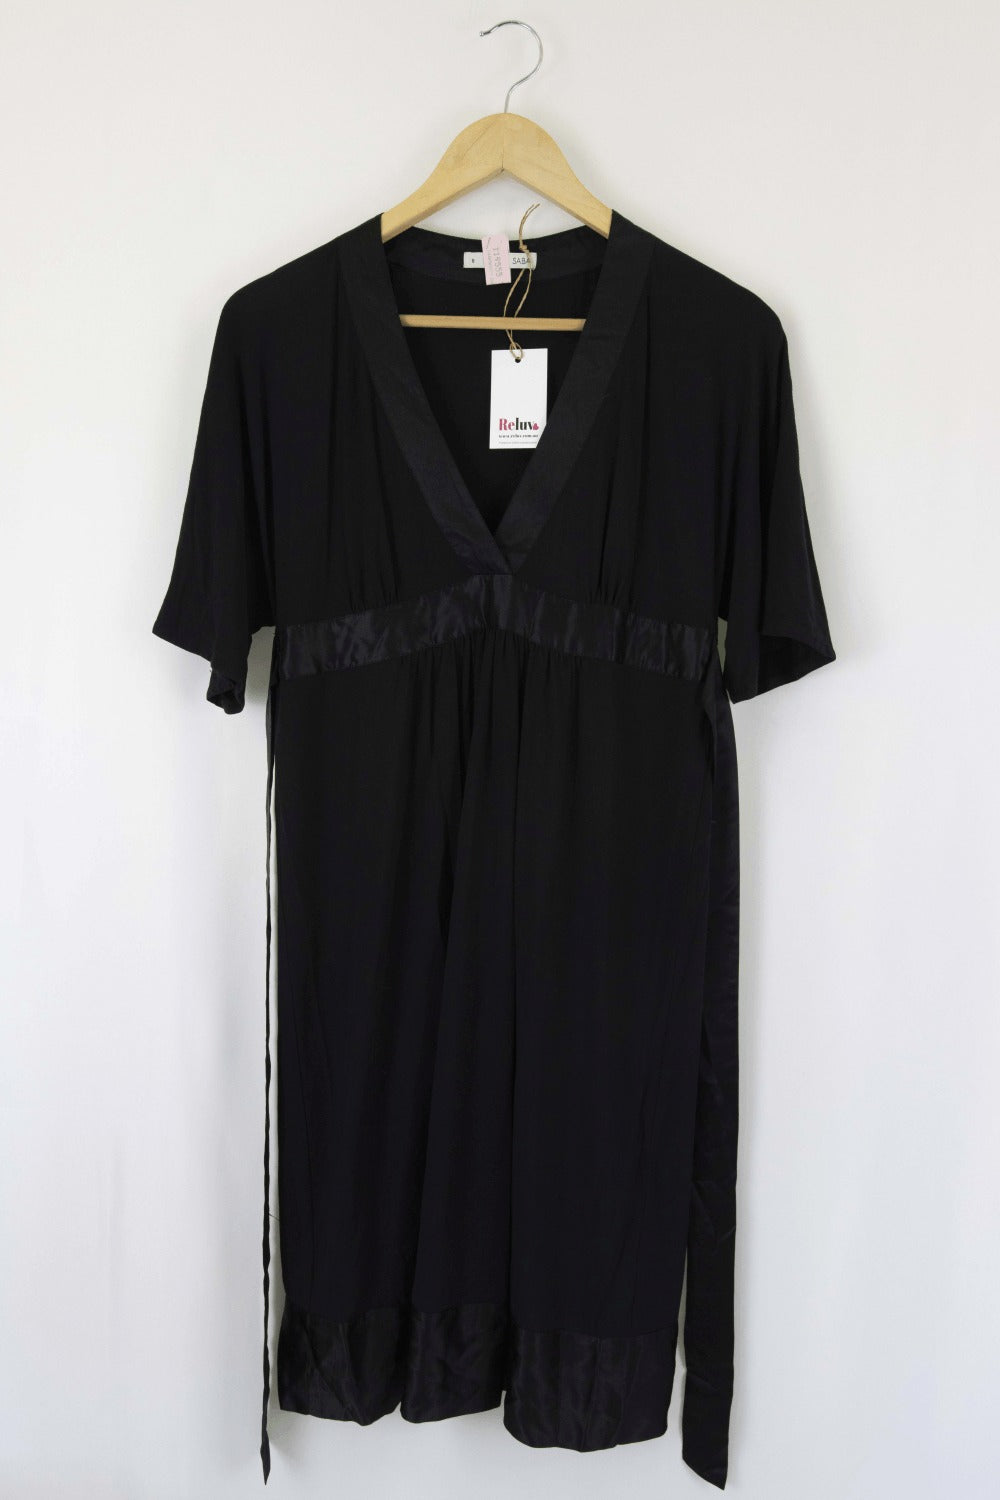 Saba Black Dress 8